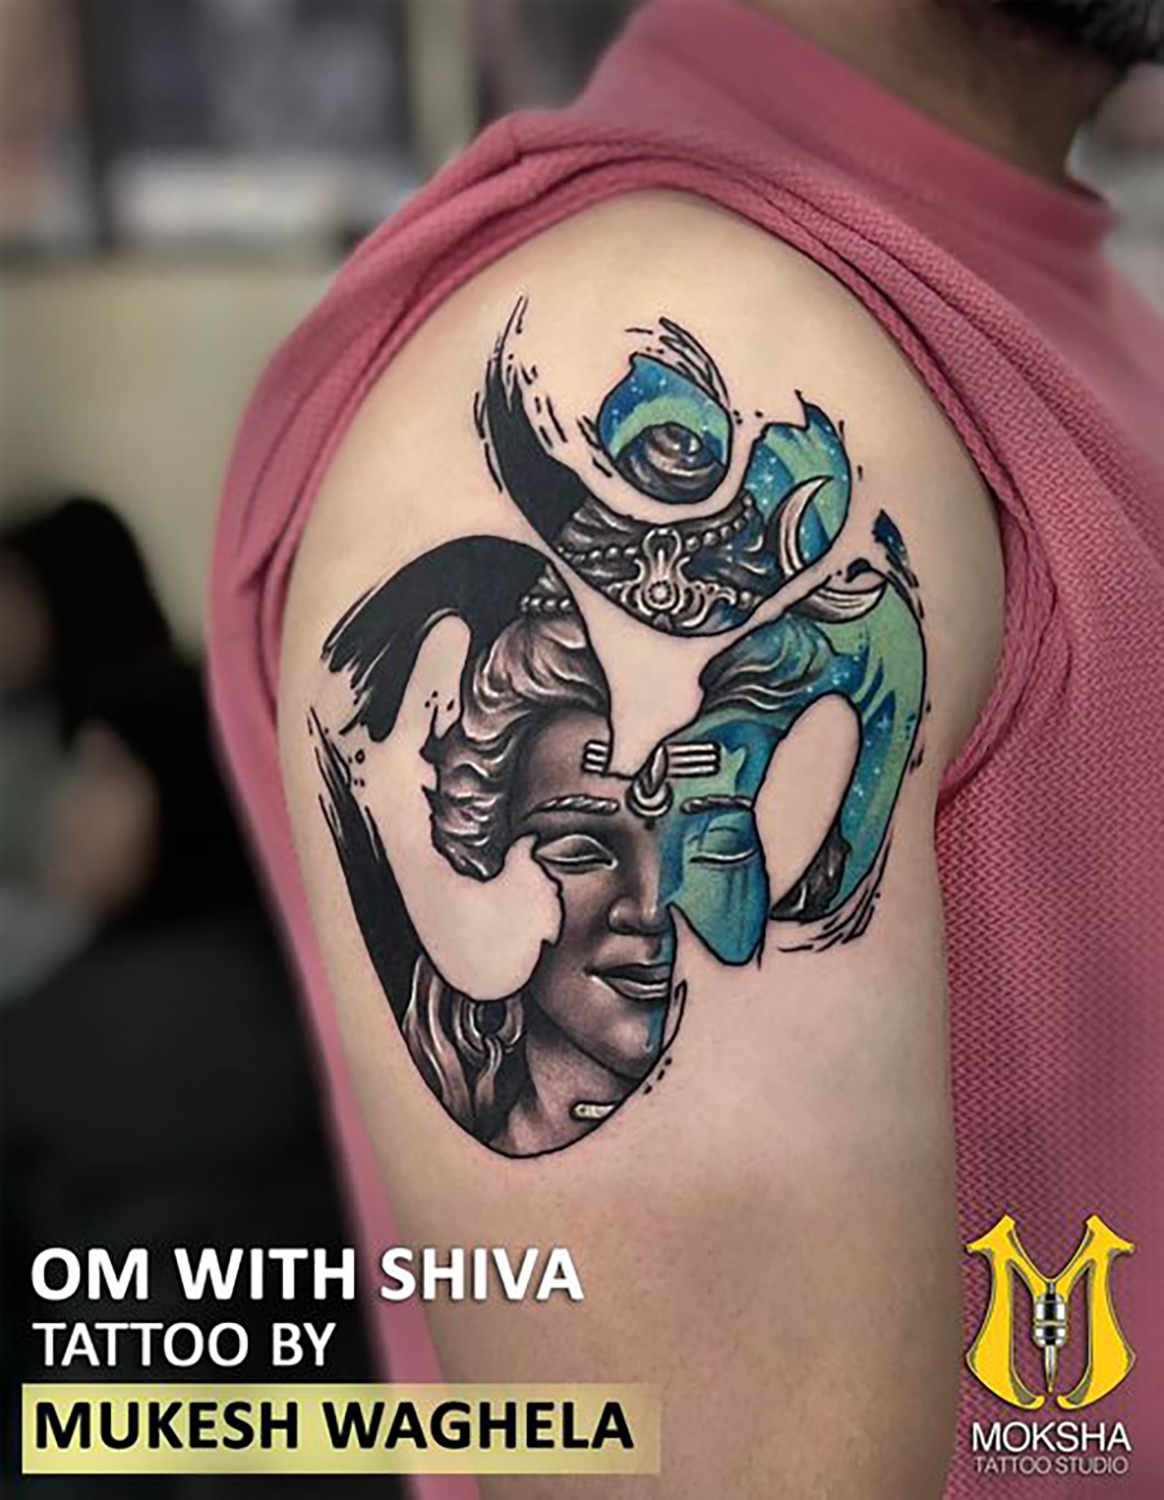 Shiva Tattoo By Mukesh Waghela The Best Tattoo Artist In Goa At ...